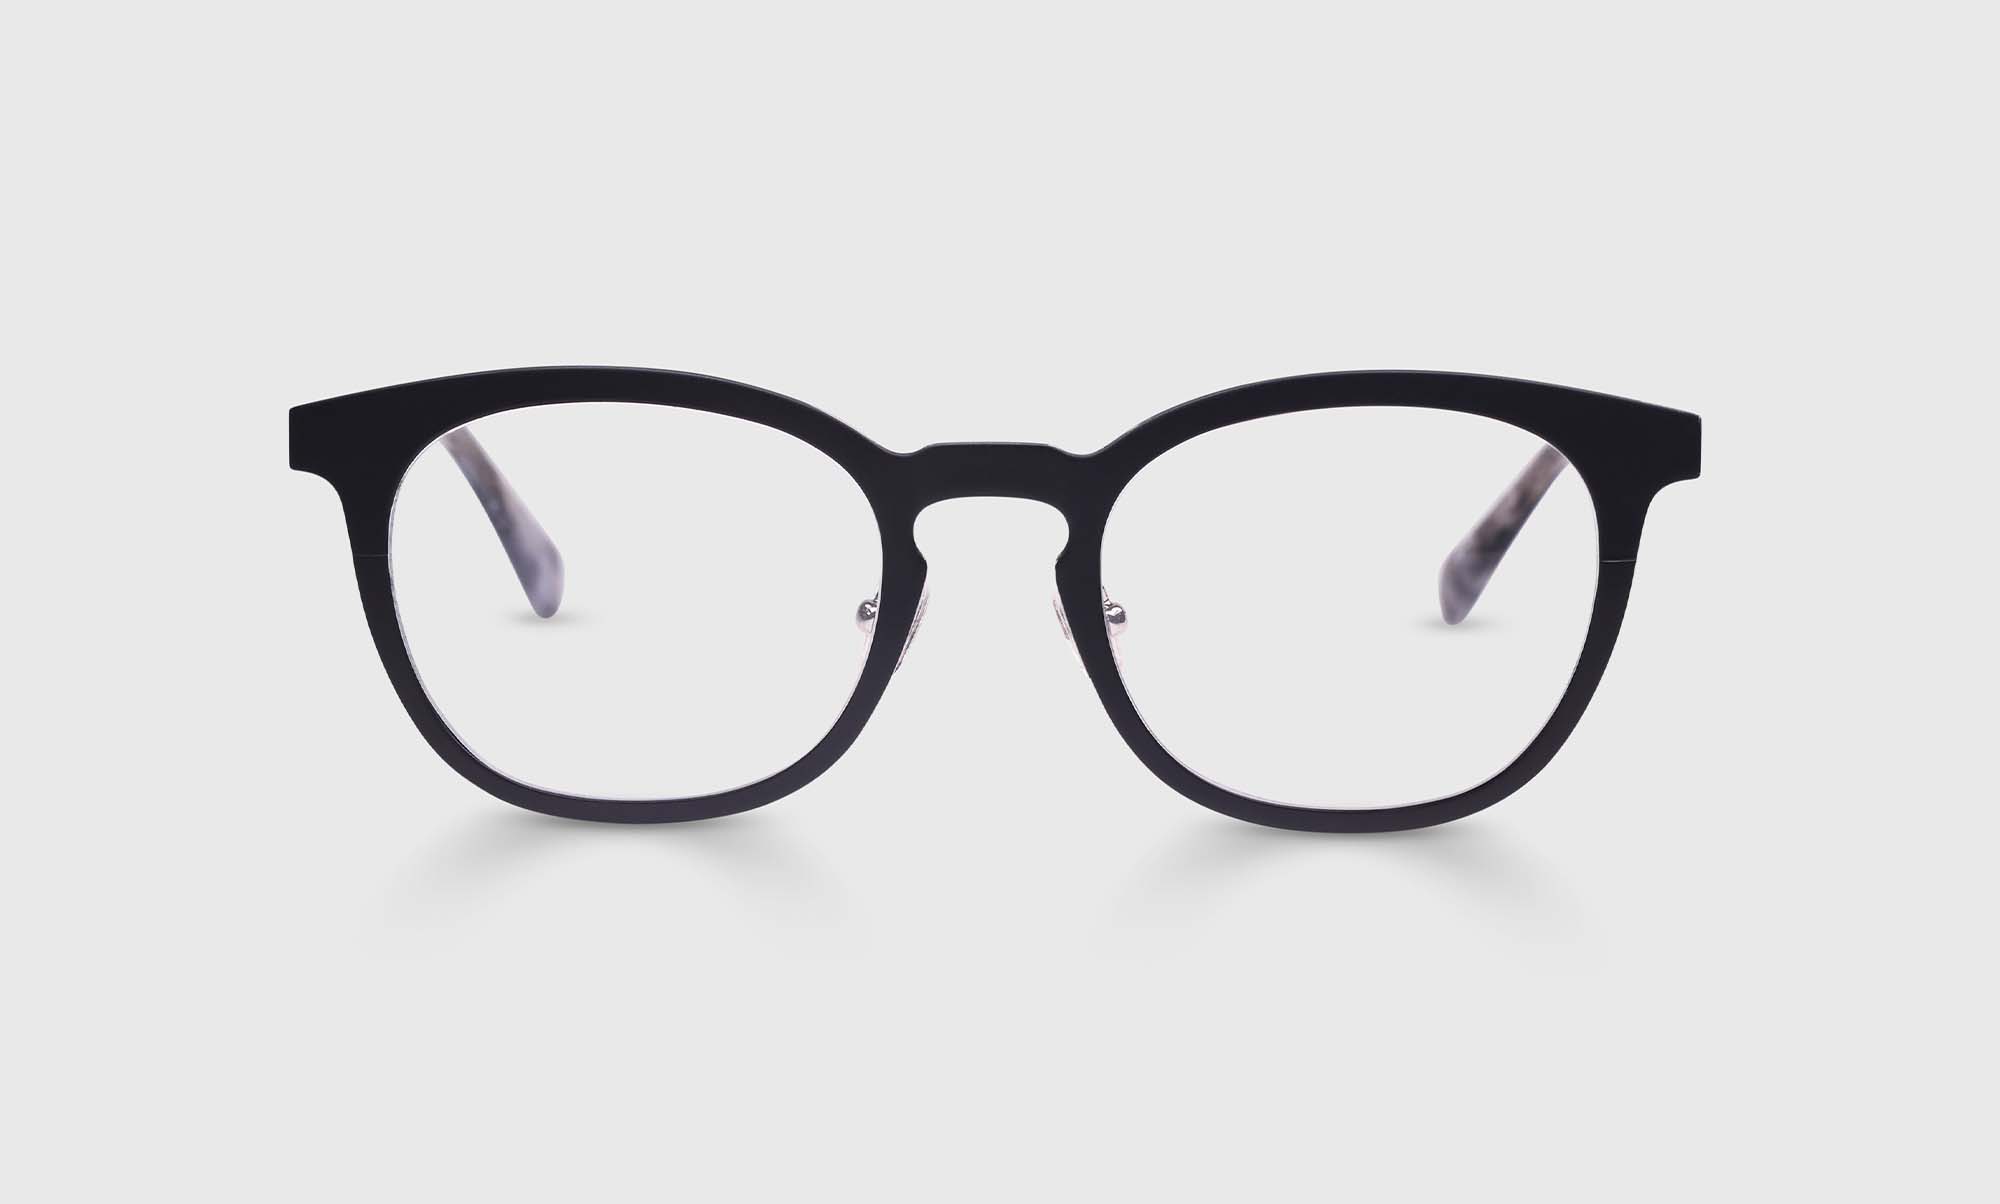 00 | eyebobs Alloy Ally, Average, Round, Readers, Blue Light, Prescription Glasses, Front Image